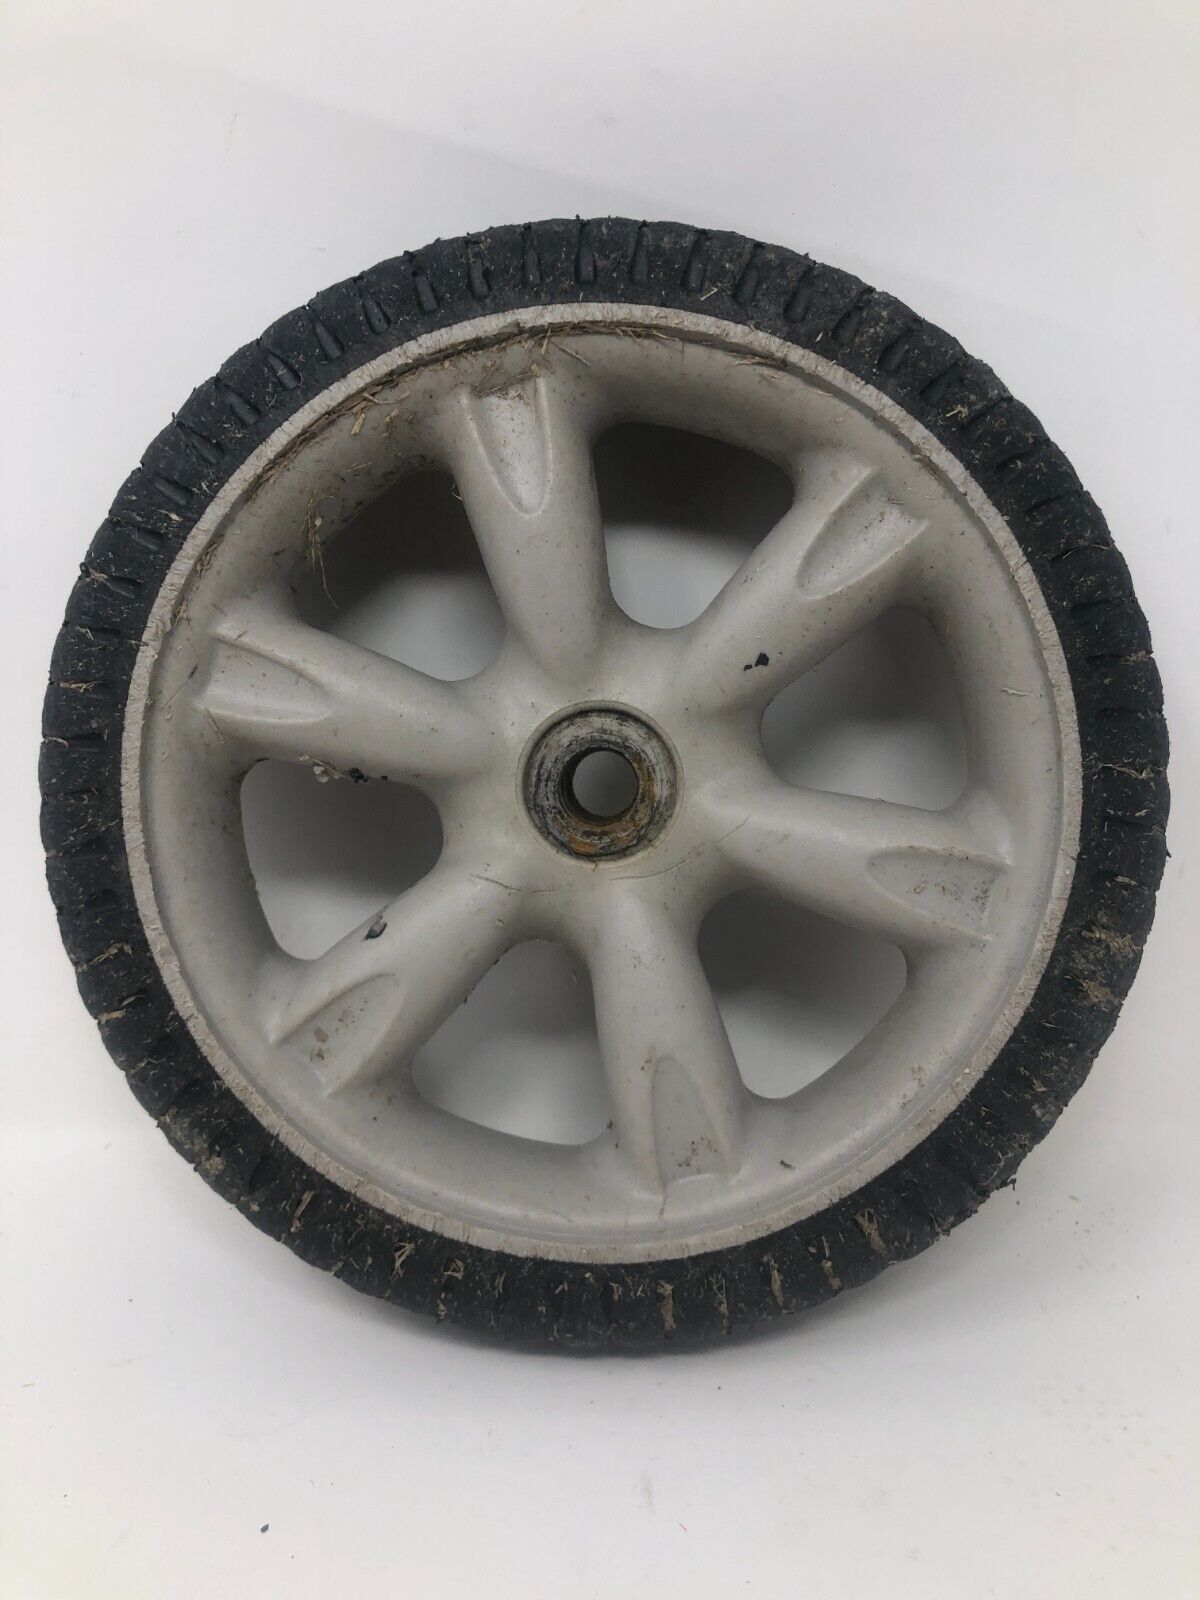 Wheels Assy Comp From MTD 11A-424B352 Mower - $9.99